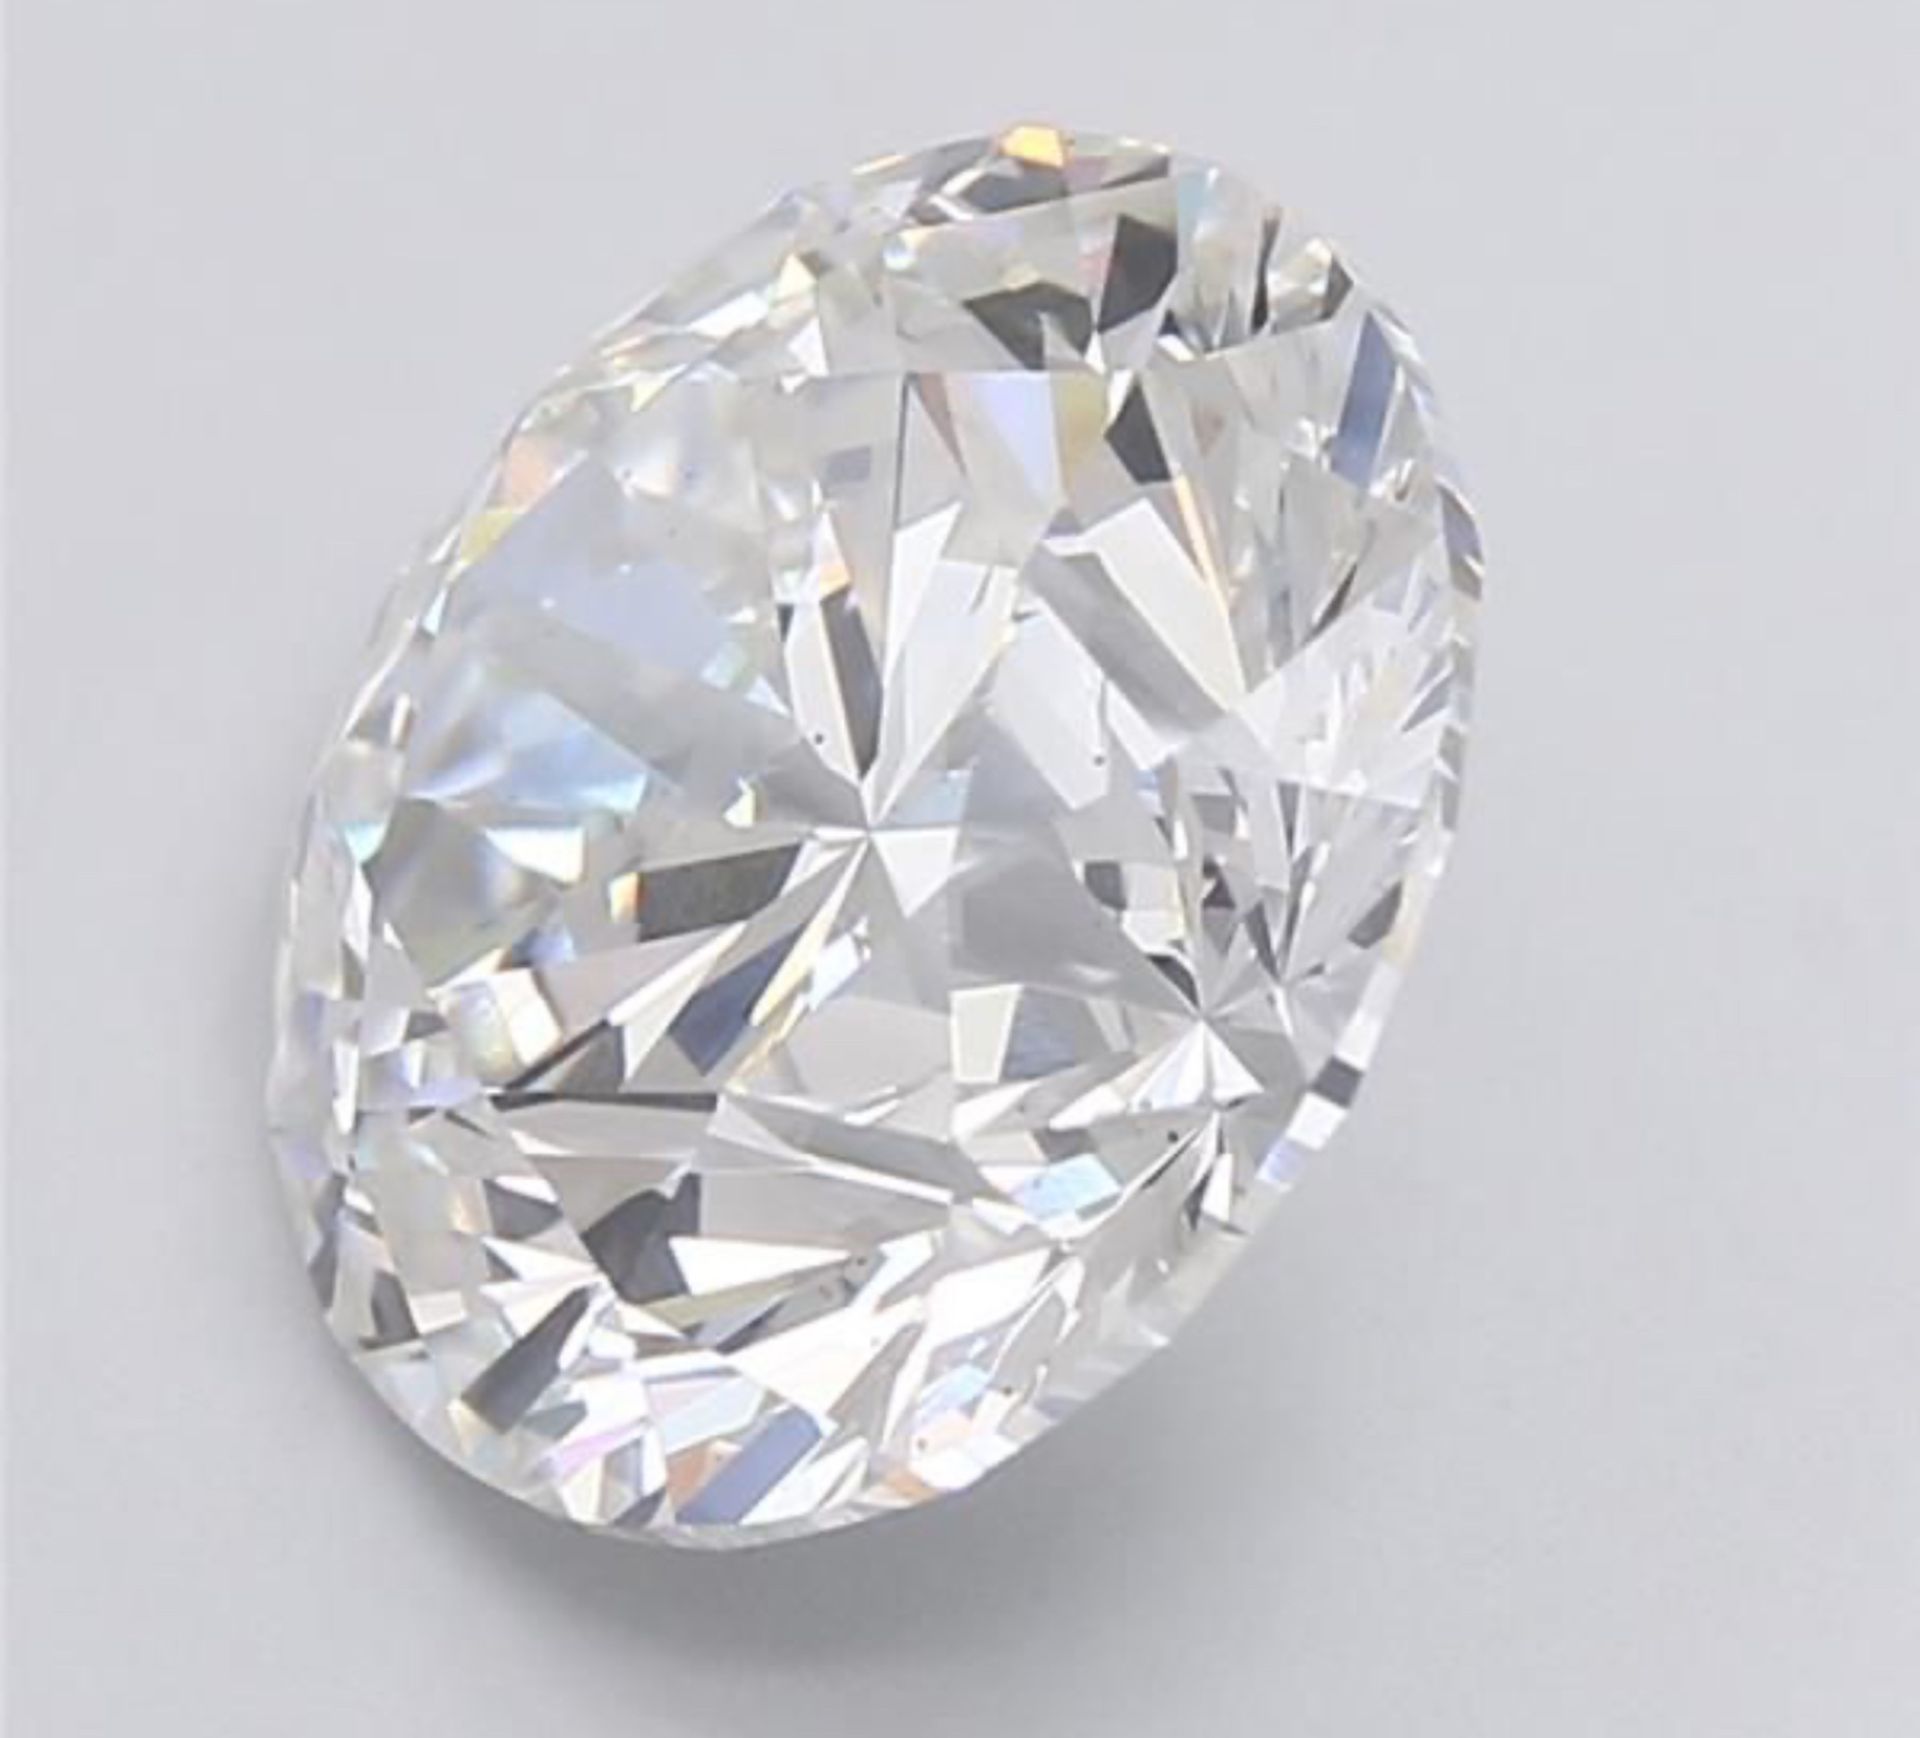 ** ON SALE ** Round Brilliant Cut Diamond 1.00 Carat D Colour VVS1 Clarity - IGI Certificate - Image 2 of 6